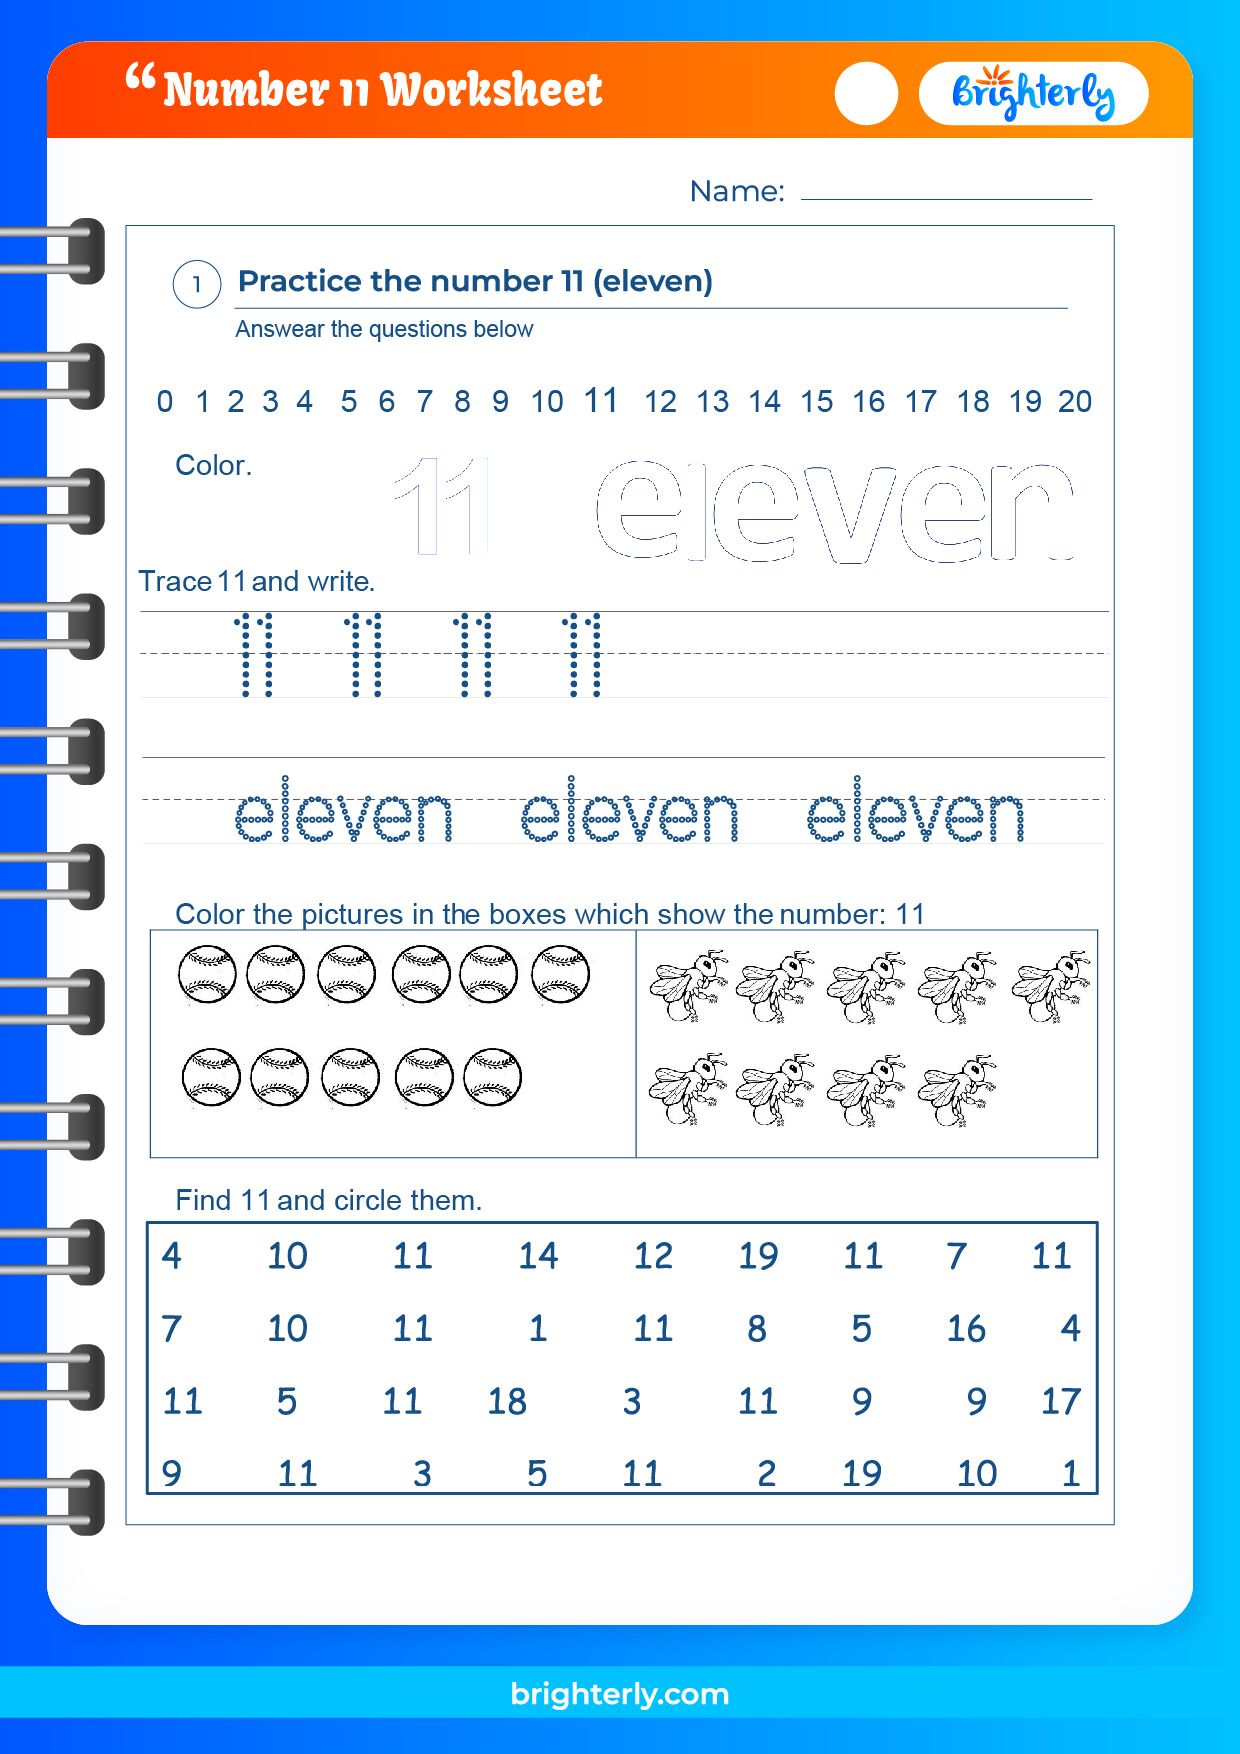 Free Printable Number 11 (Eleven) Worksheets for Kids PDFs